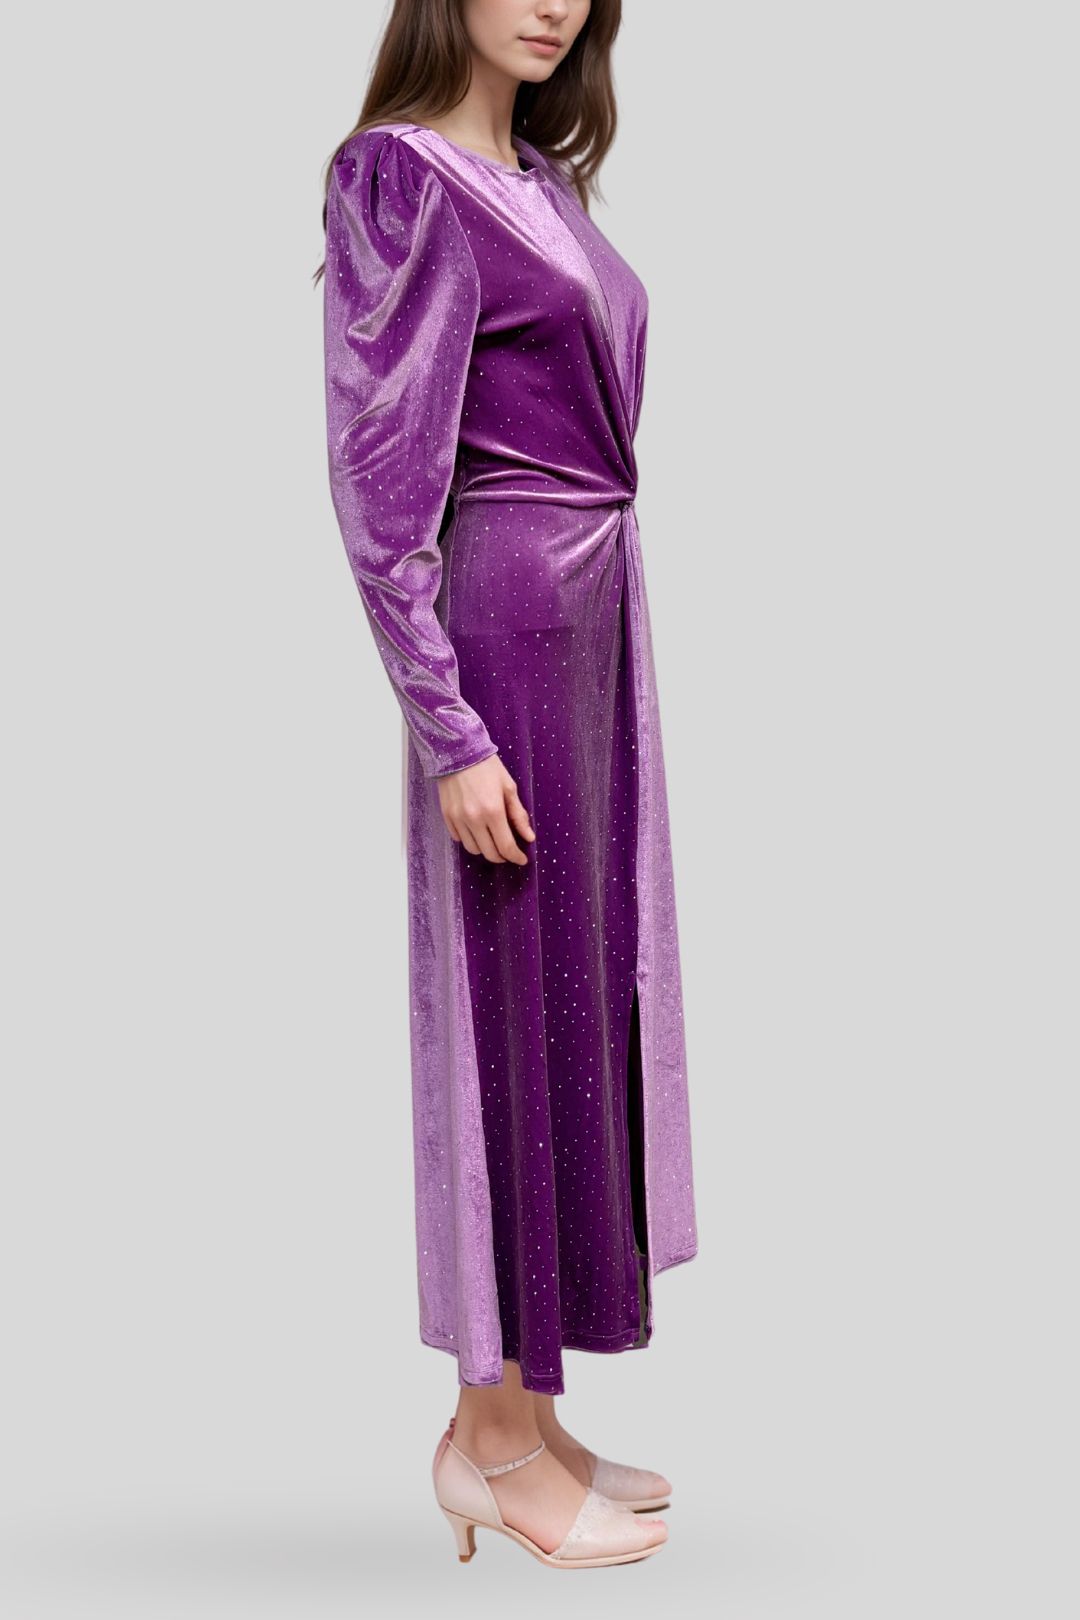 yas twist Front Purple Long Sleeve Dress two tone